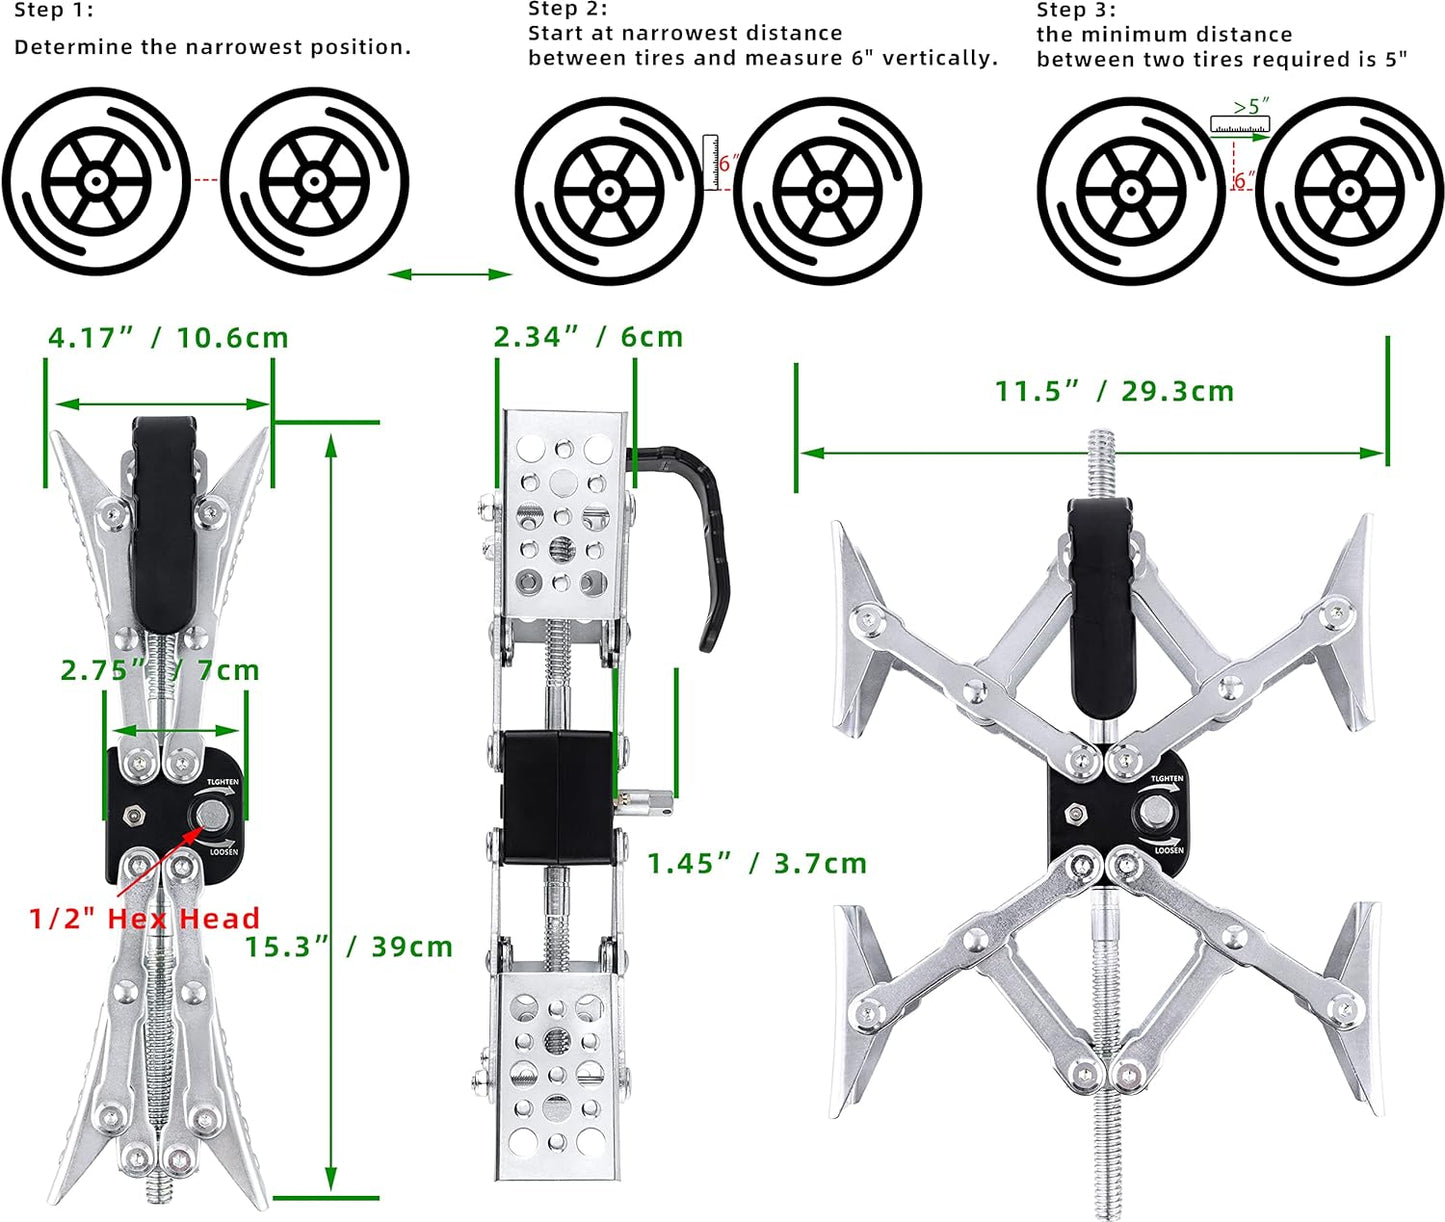 X-Shaped RV Stabilizer Wheel Chock (Allow Drill Adjust)